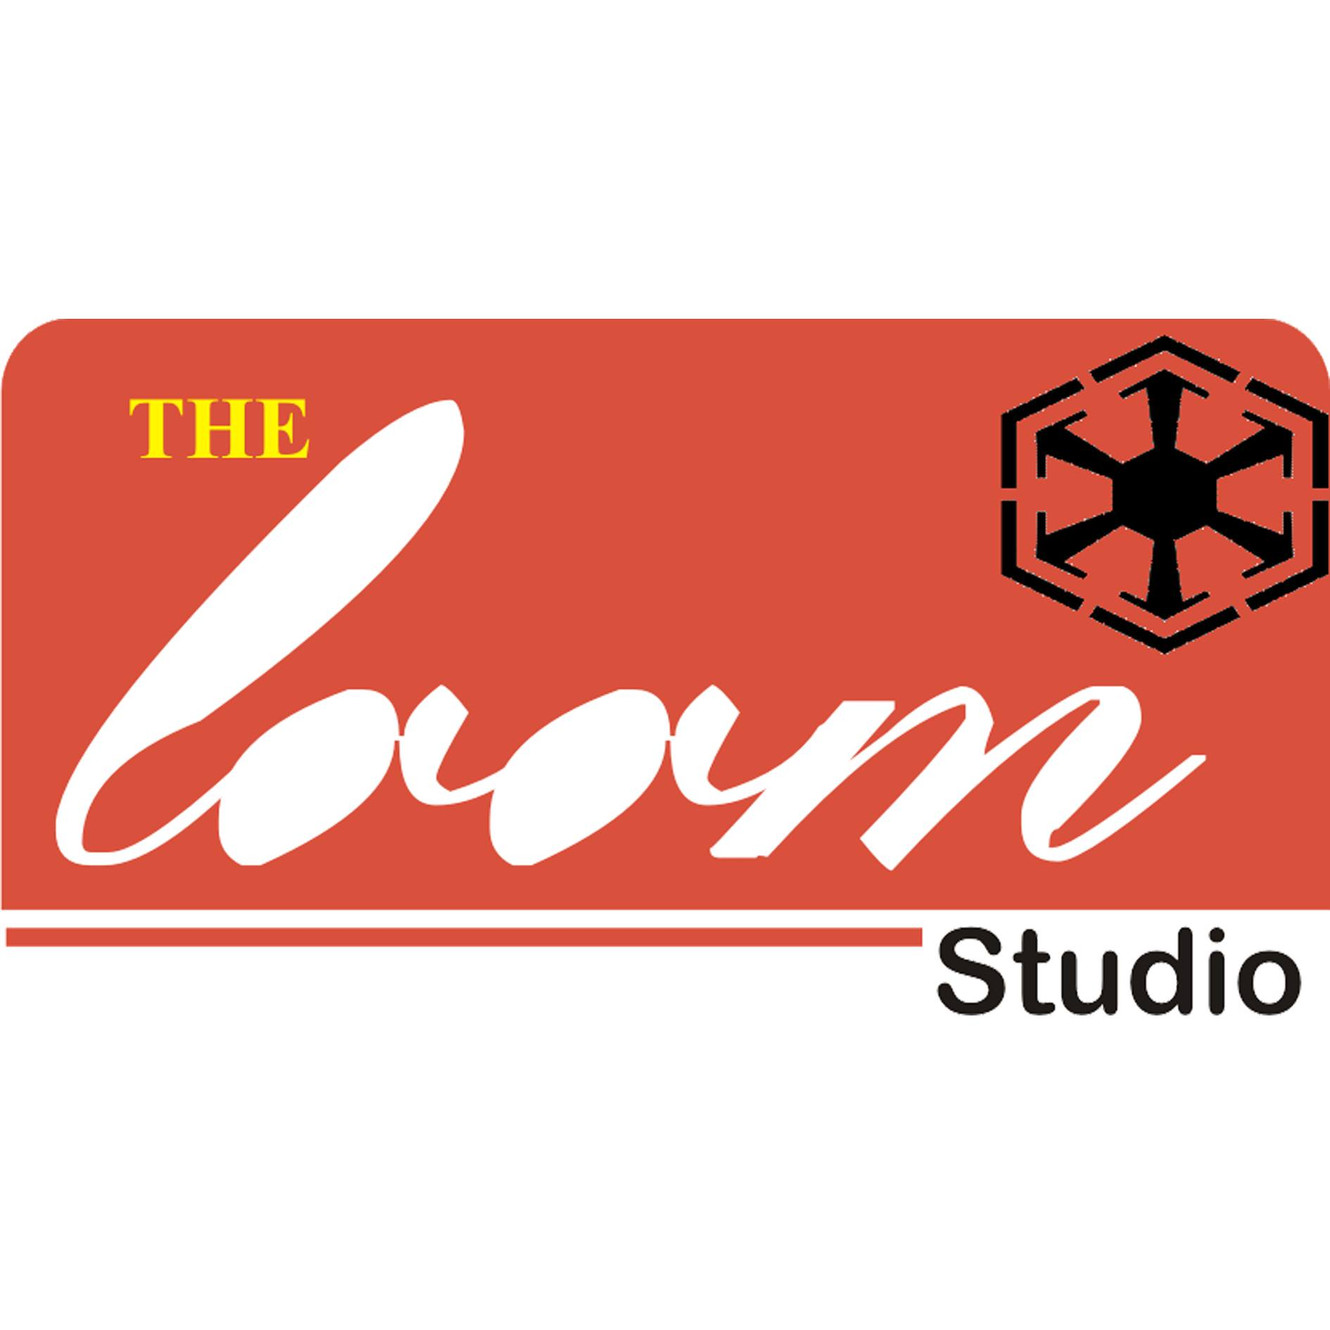 Shop Premium Cotton Kaftans for Women Online in India | The Loom Studio